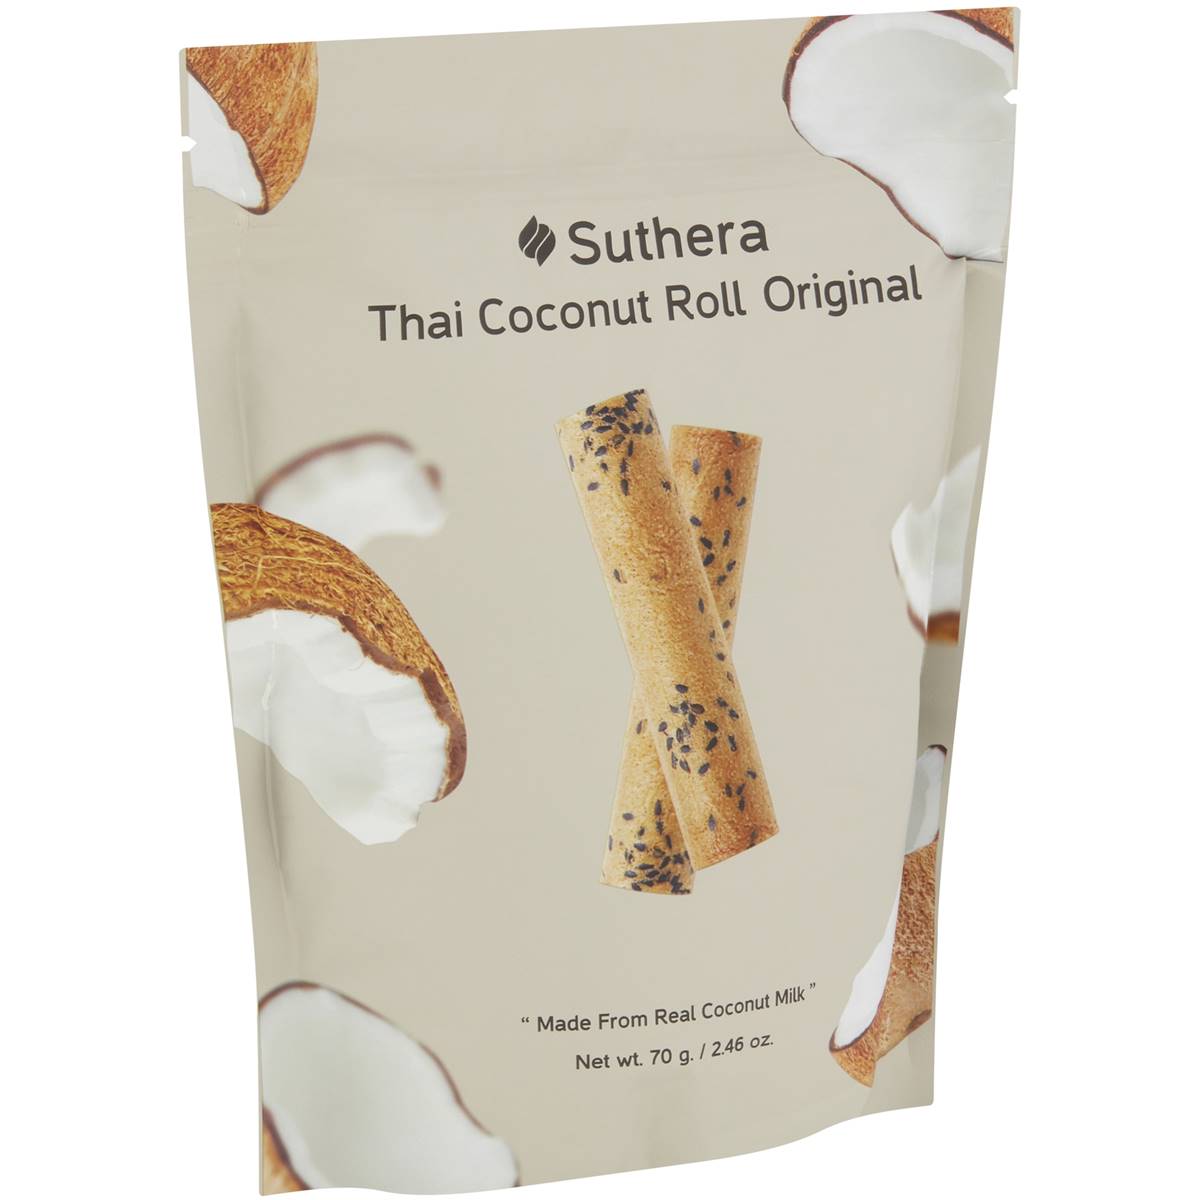 Bánh quế dừa mè Suthera Thai Coconut Roll Original 70g | Mua sắm hàng Úc tại Ausmart